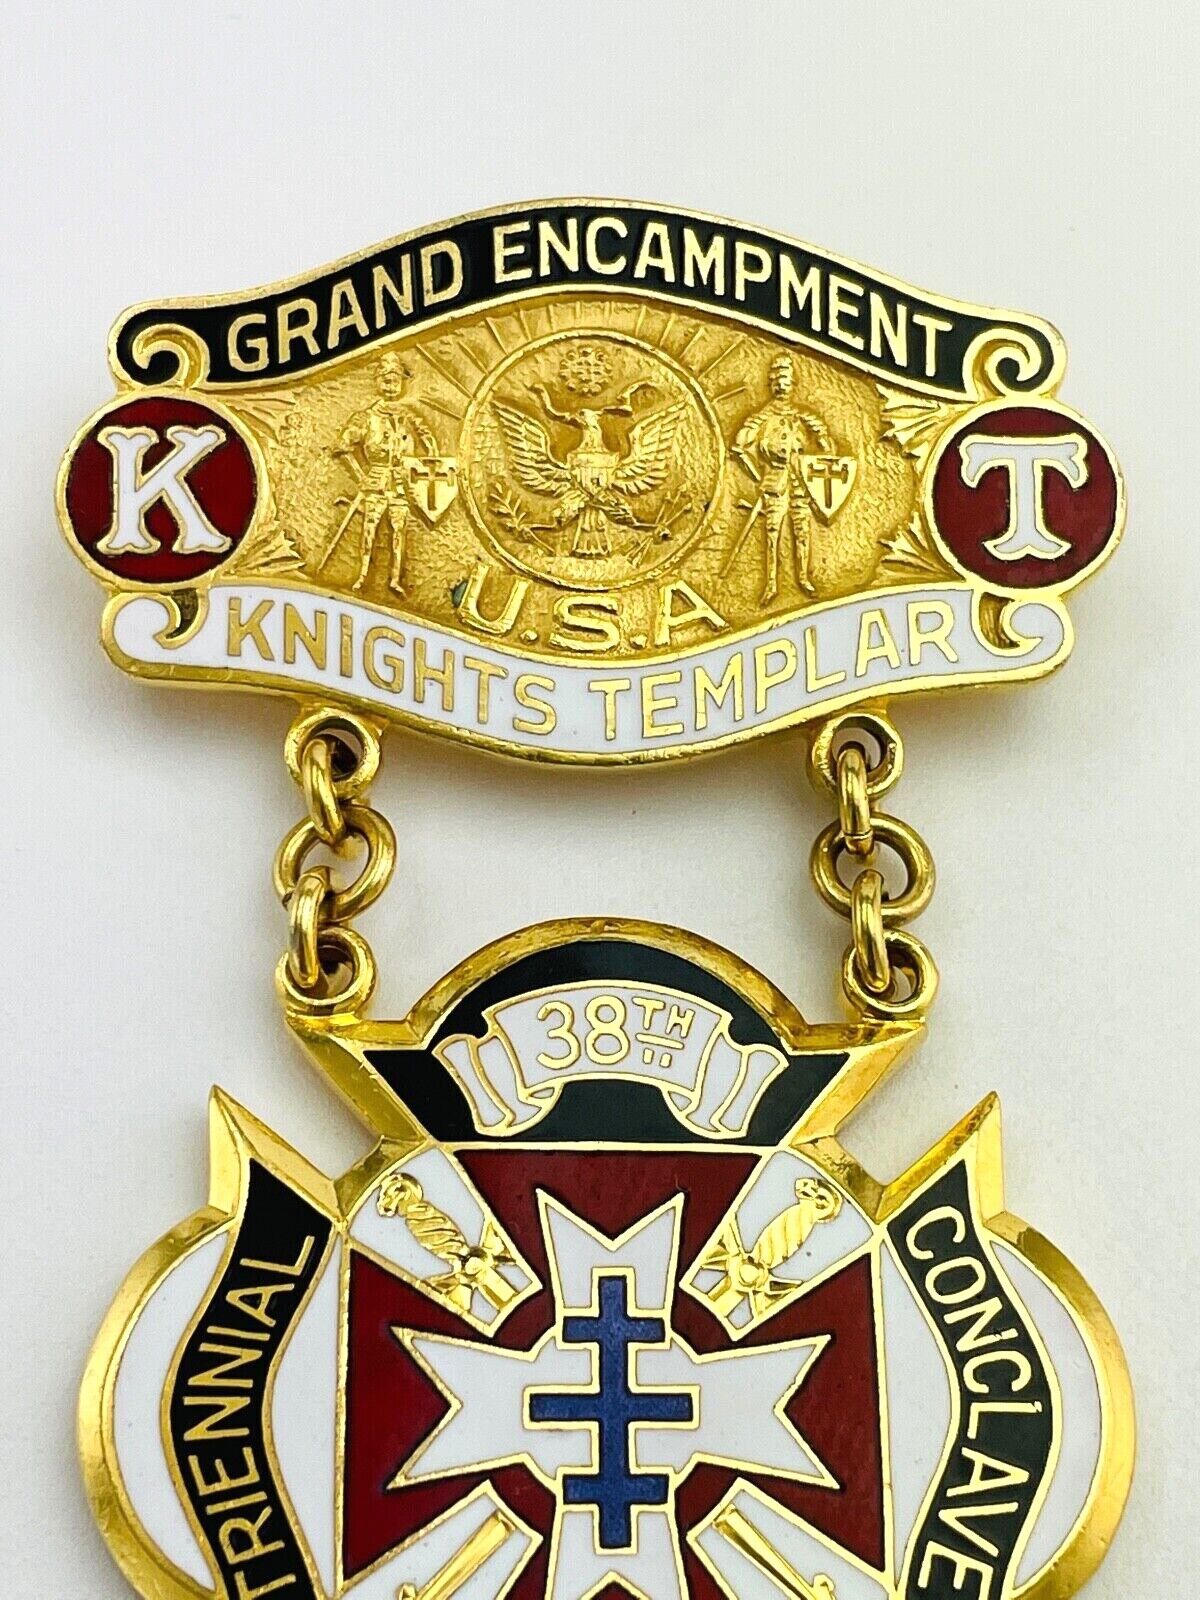 Antique Knights Templar Grand Encampment Triennial Conclave Pin Medal Badge 1931